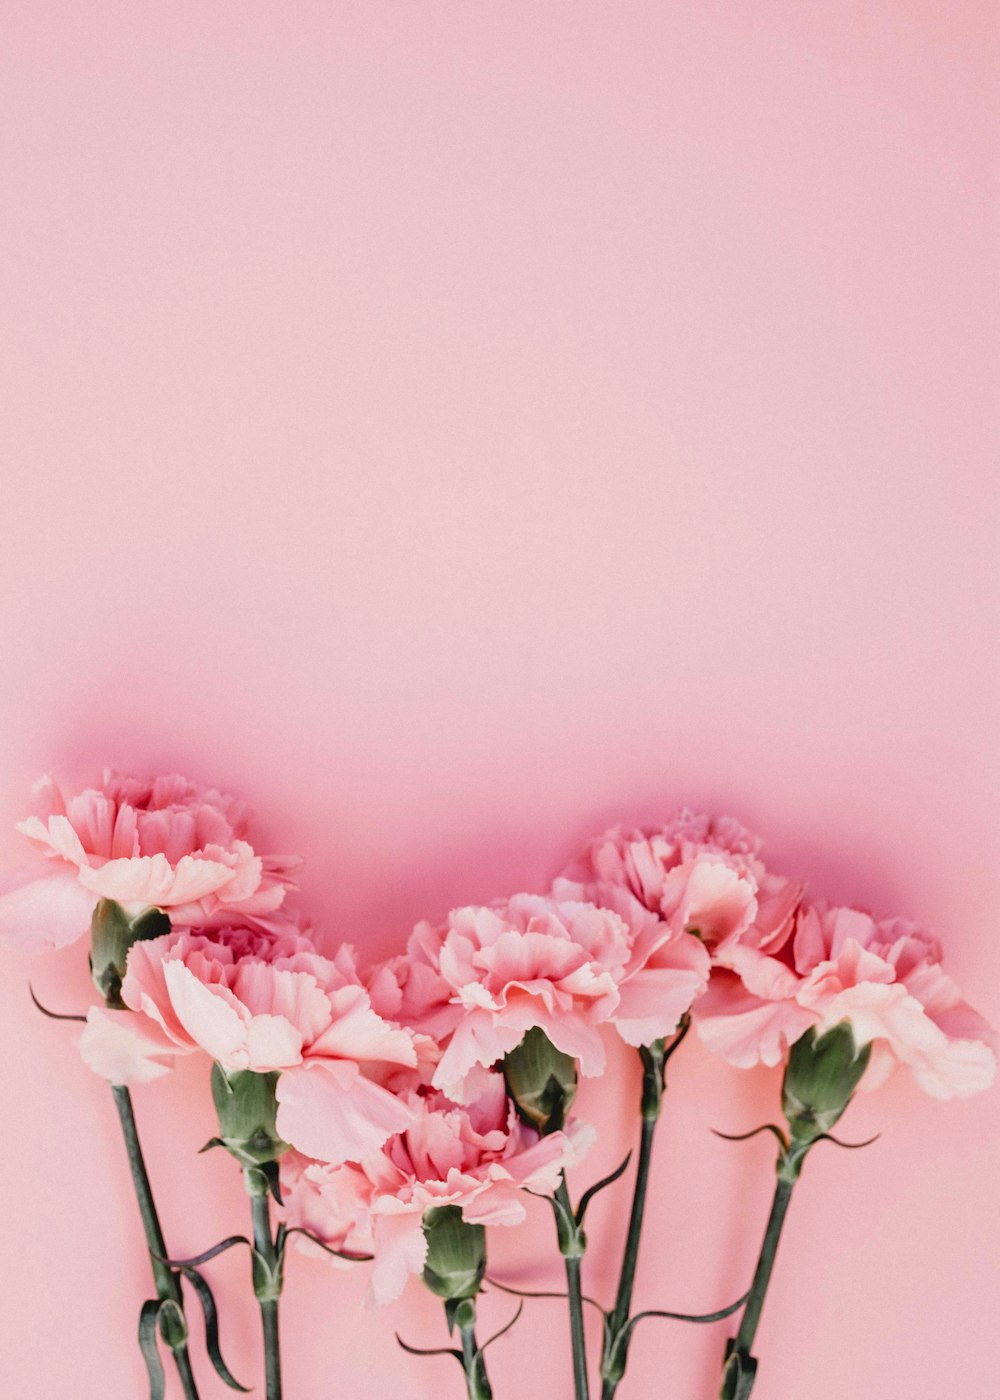 Flores rosas con fondo rosa.